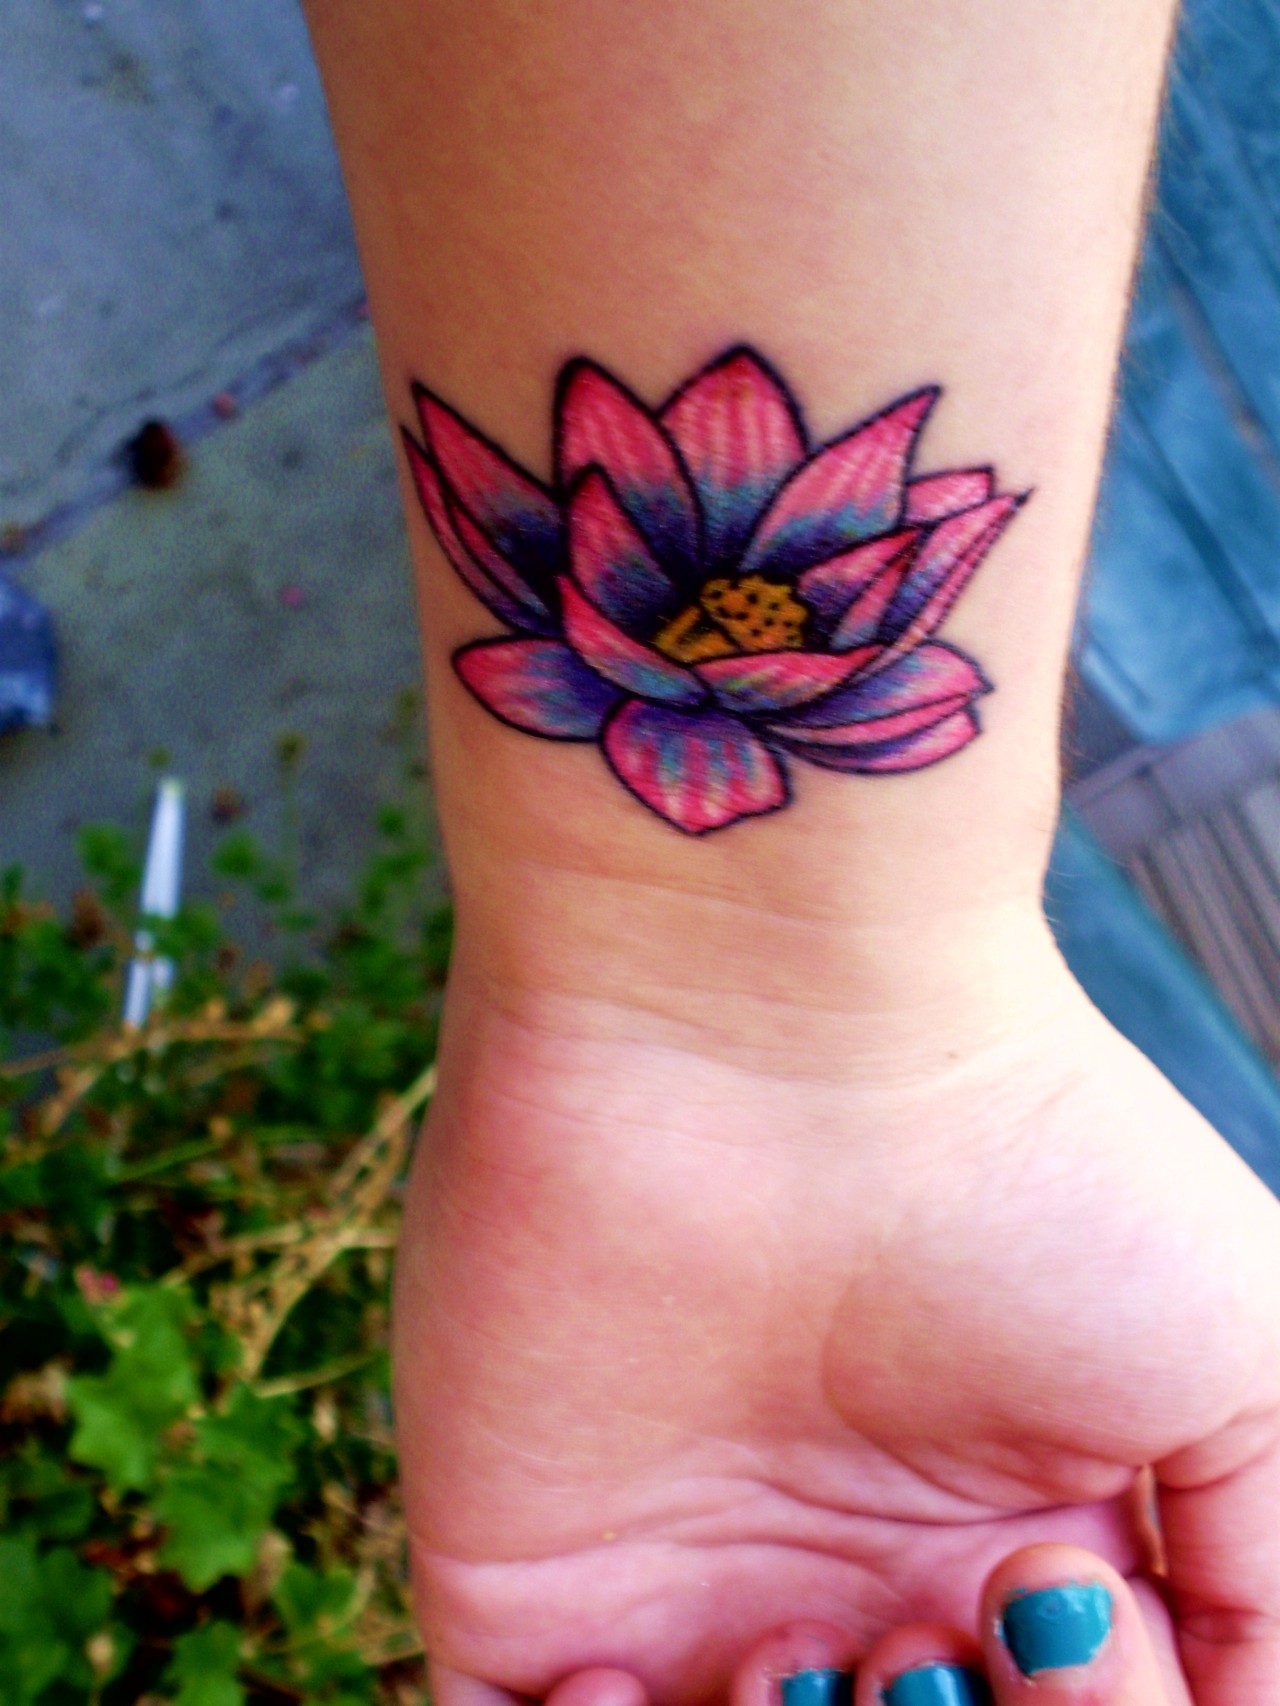 Sunflower Tattoos